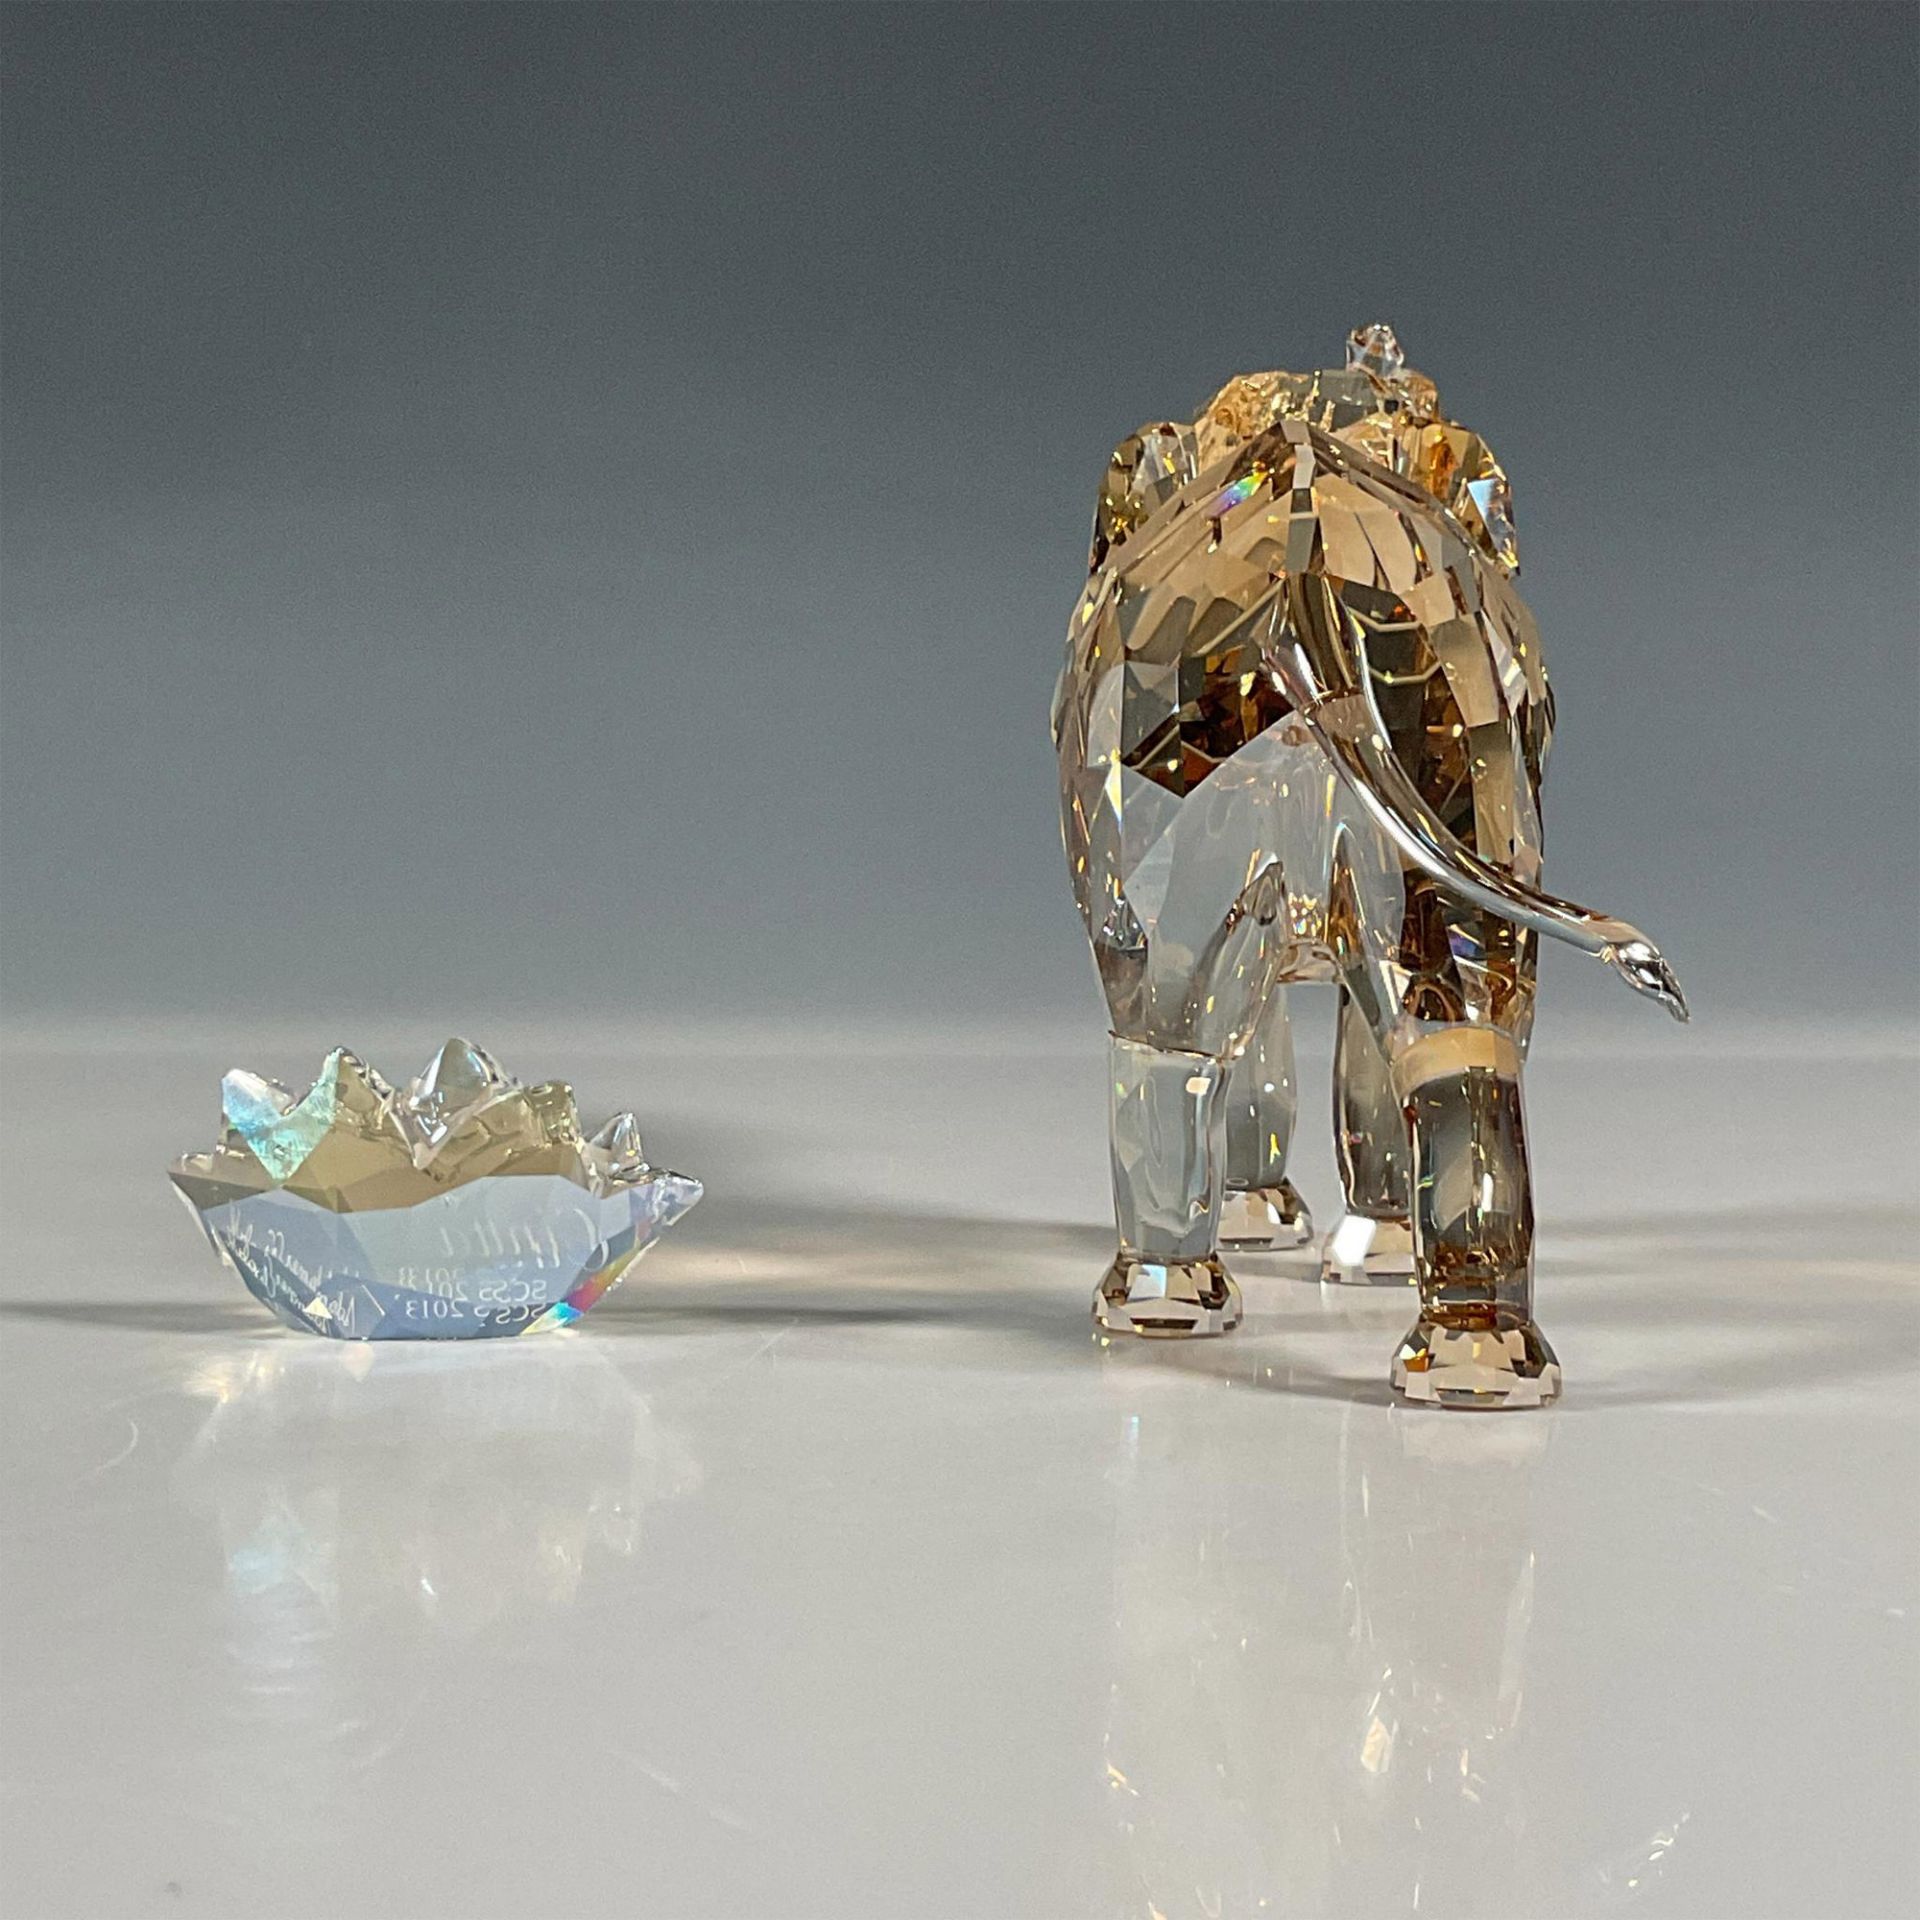 Swarovski Crystal Figurine with Plaque, Cinta the Elephant - Image 3 of 5